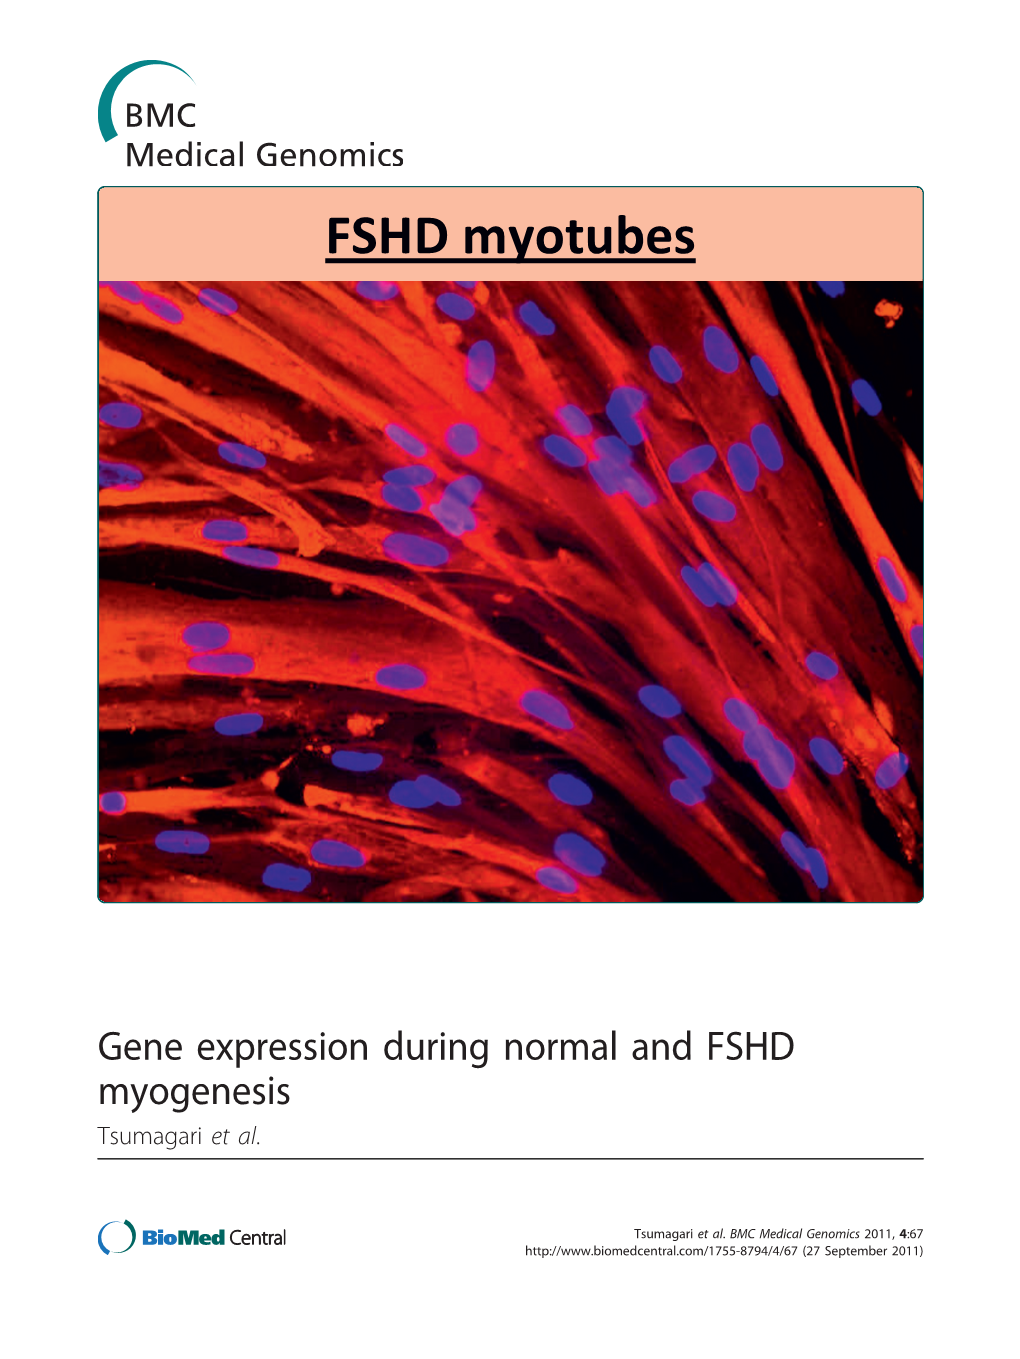 Gene Expression During Normal and FSHD Myogenesis Tsumagari Et Al